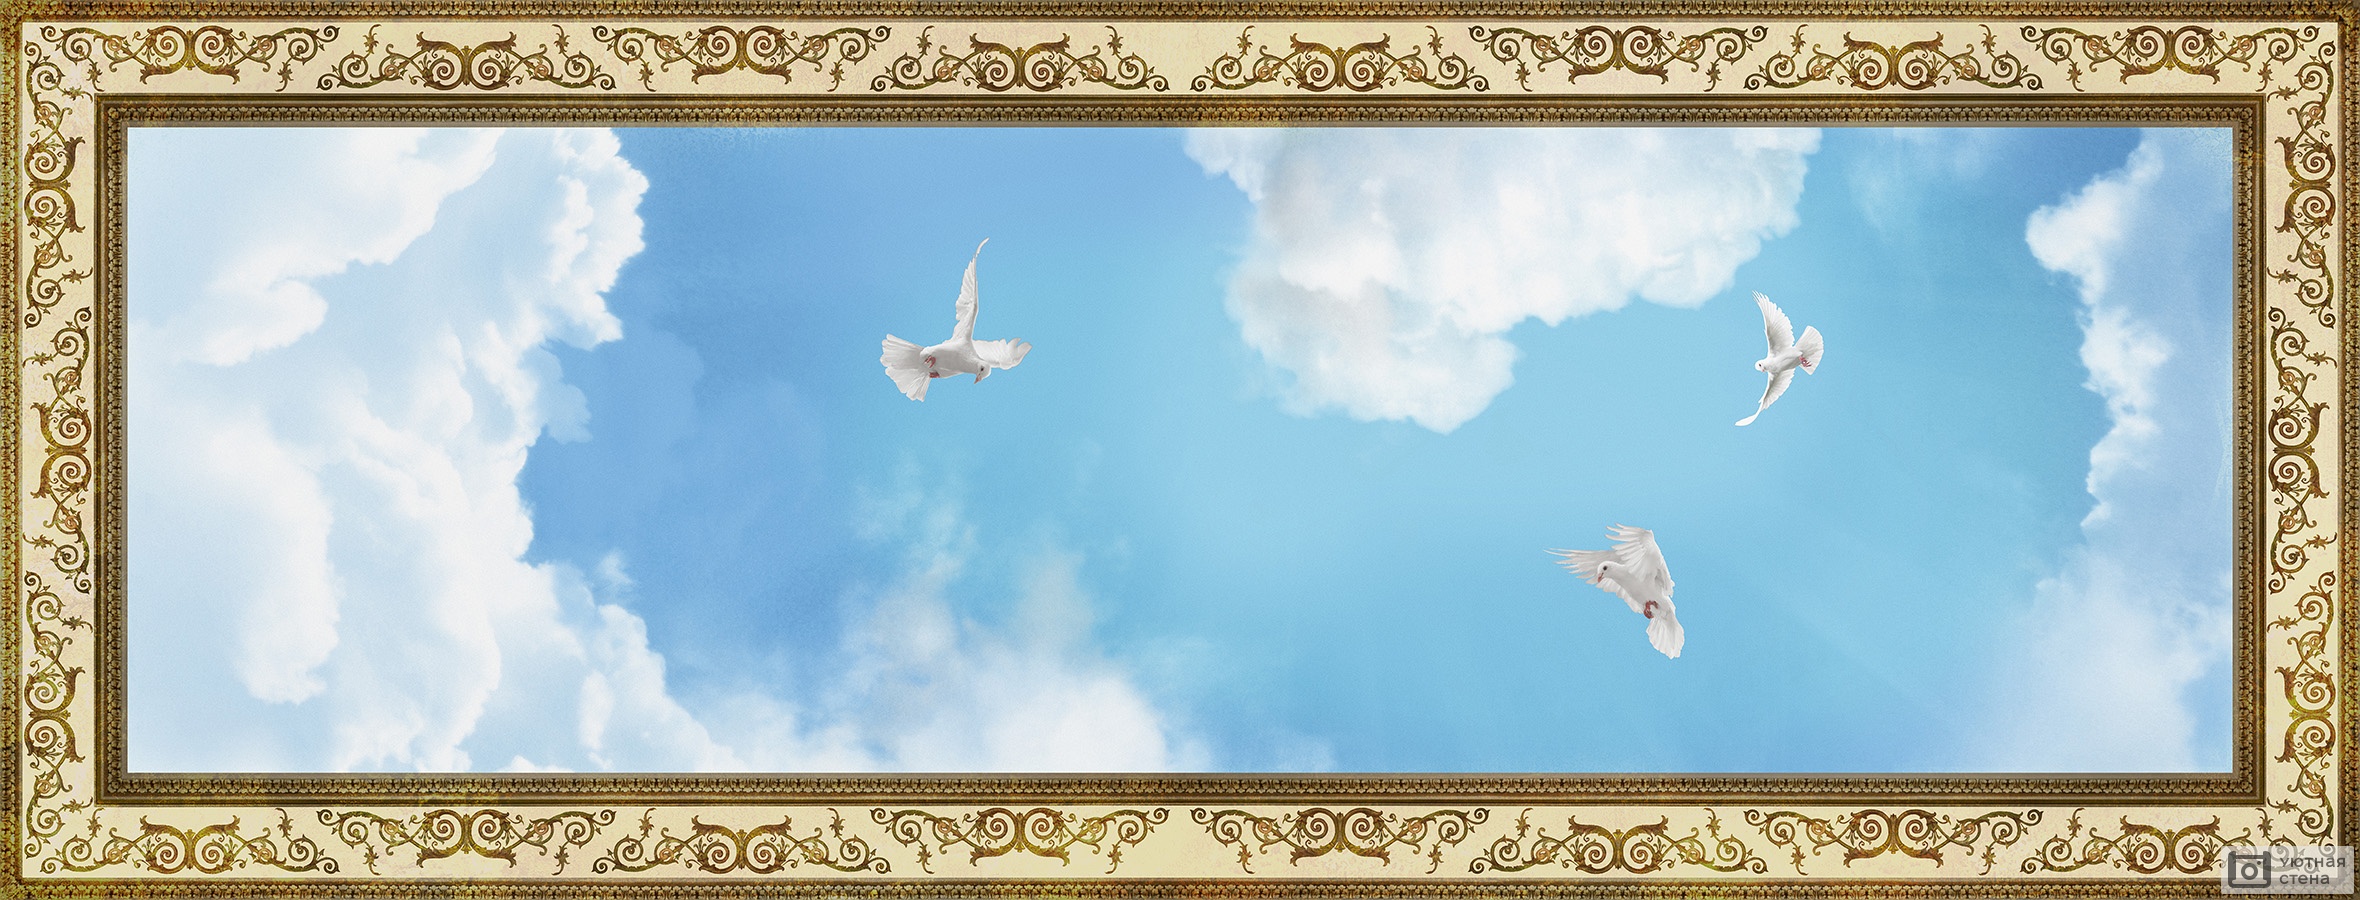 Небо и голуби с орнаментом